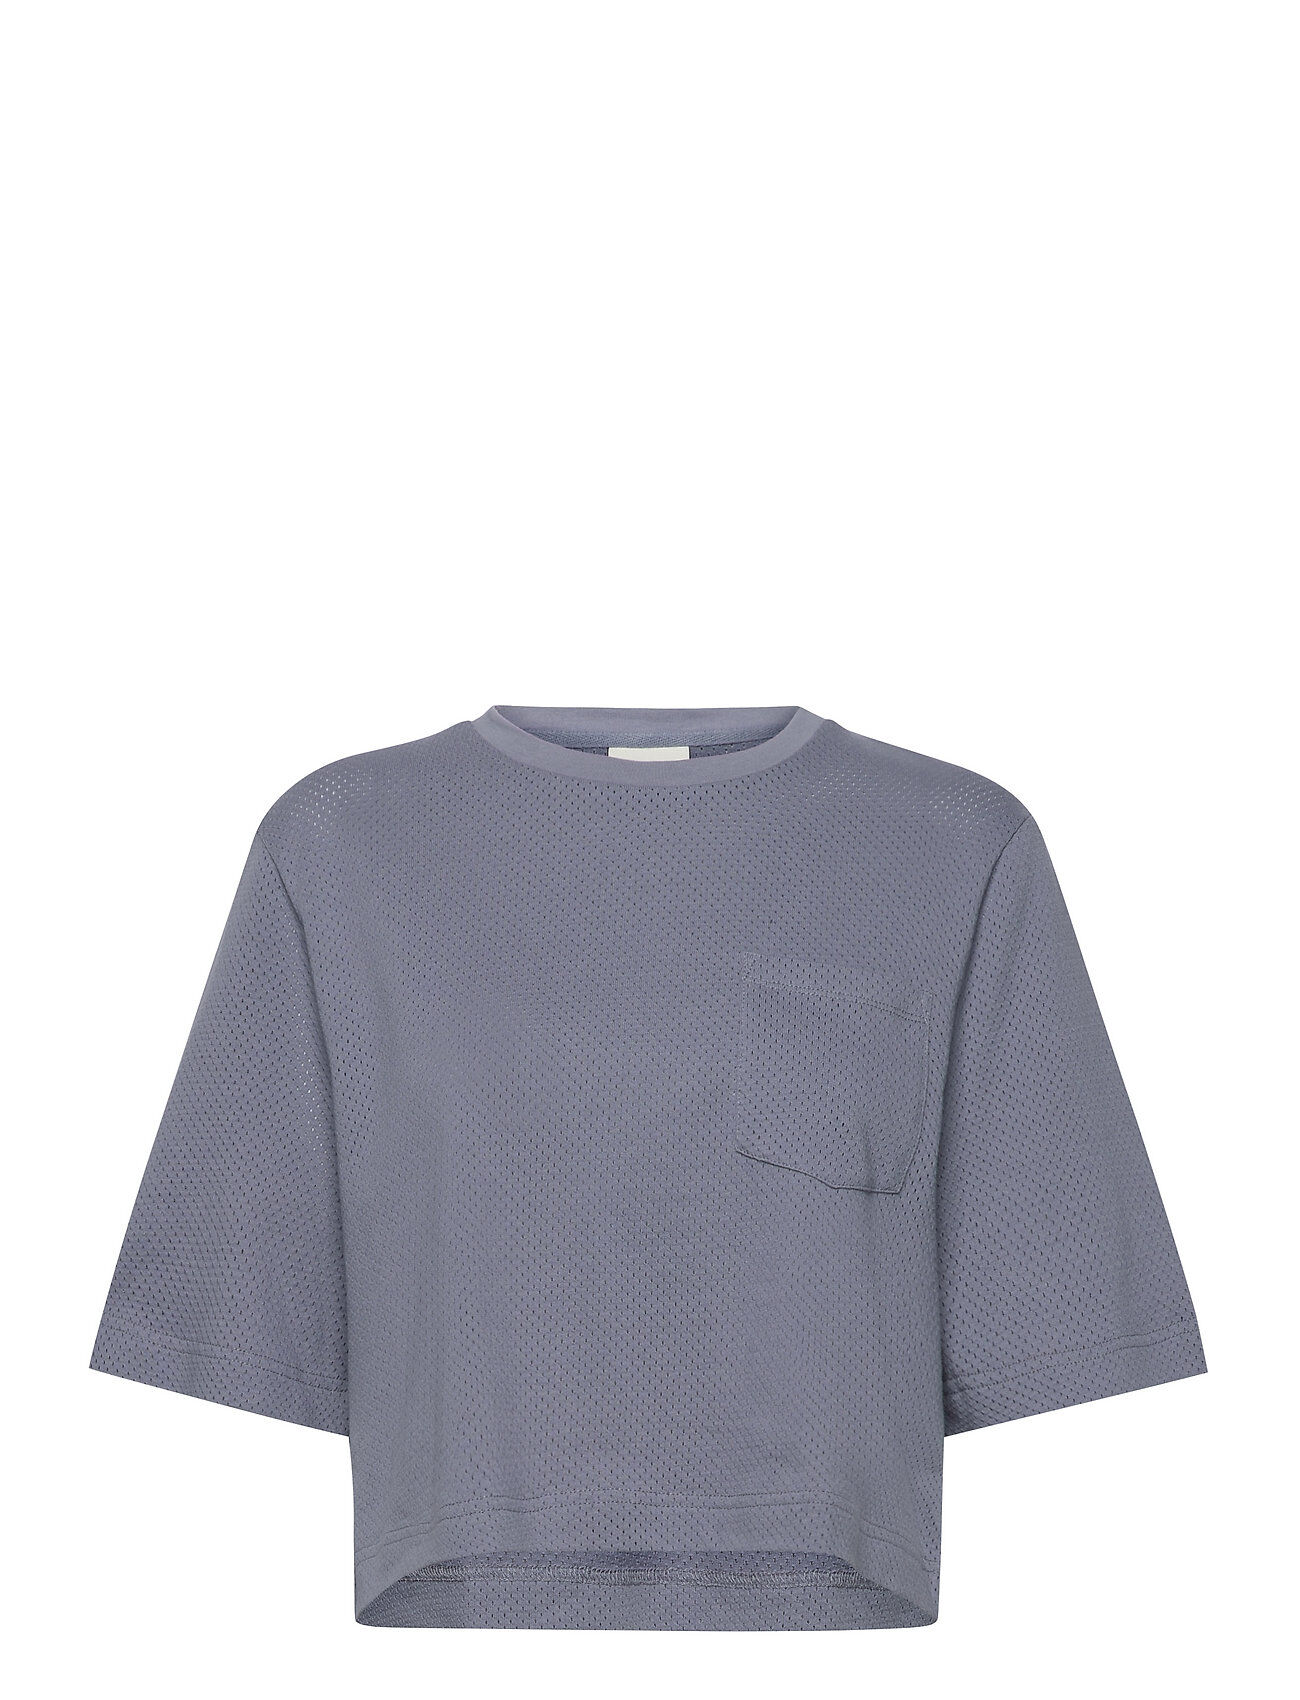 Varley Bexley T-Shirt T-shirts & Tops Short-sleeved Grå Varley